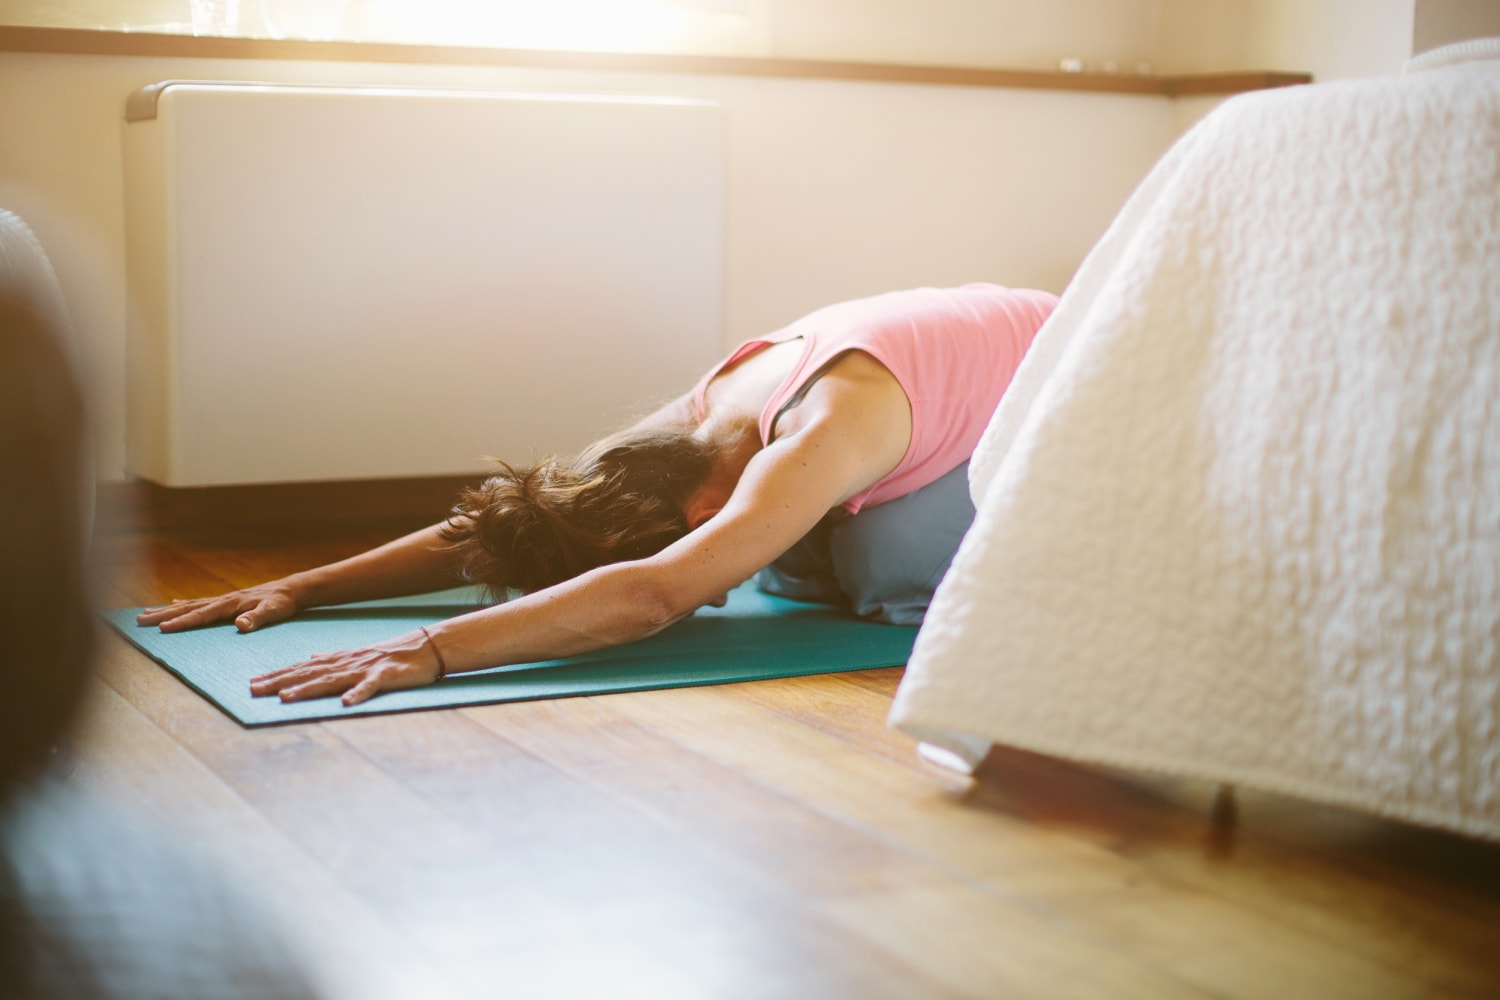 Yoga Poses For Better Sleep | FITPASS